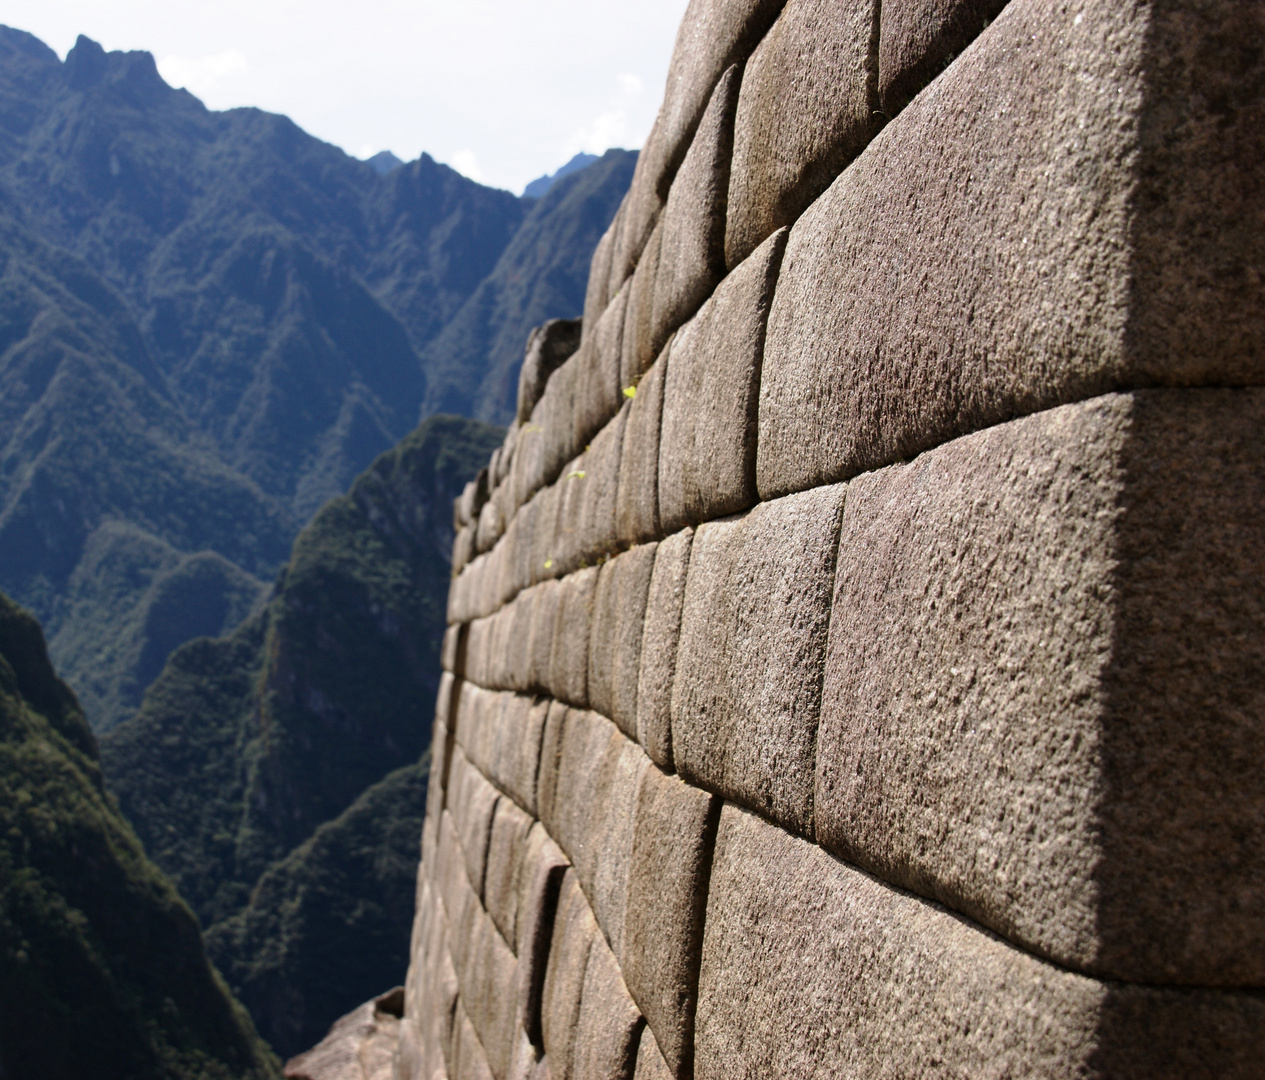 Inca Wall @ Machu Picchu